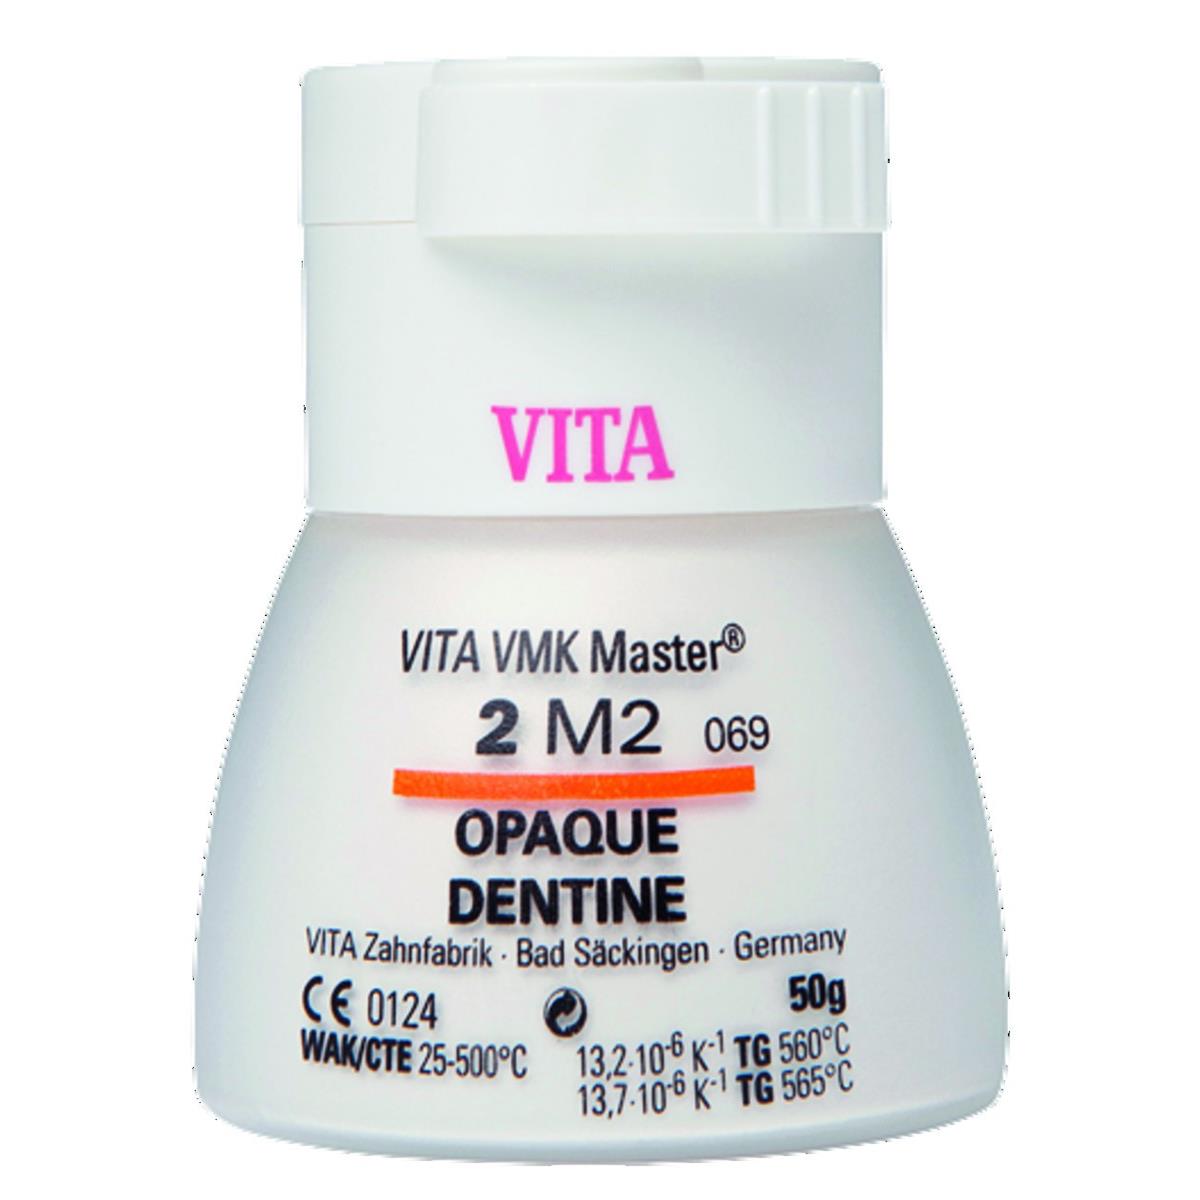 VMK Master VITA - Dentine Opaque - 4M2 - Le flacon de 50 g